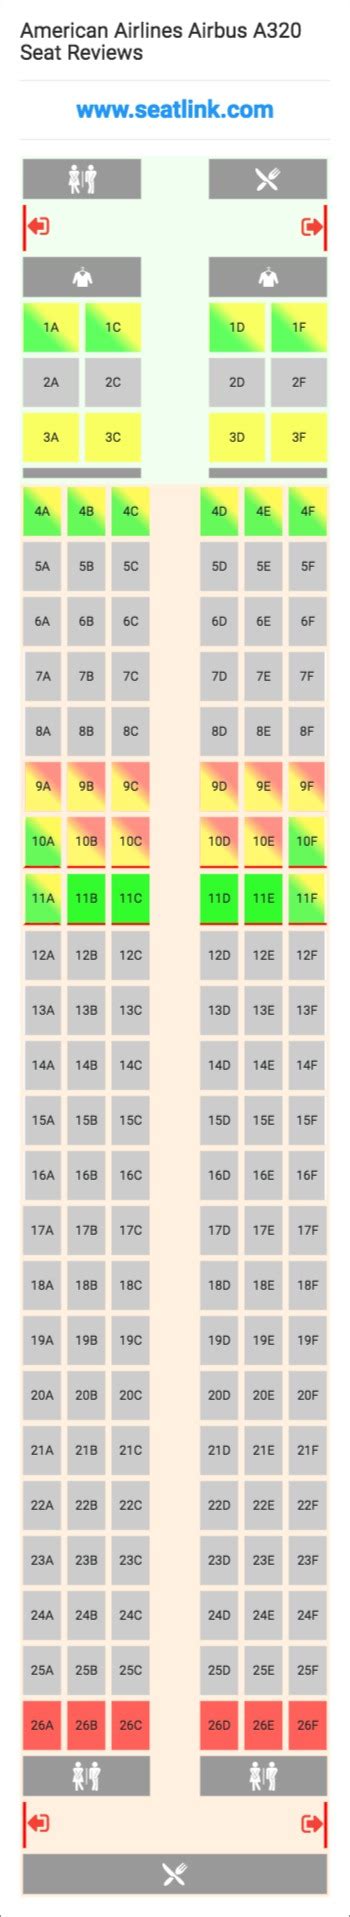 Virgin America Airbus A320 Seating Chart